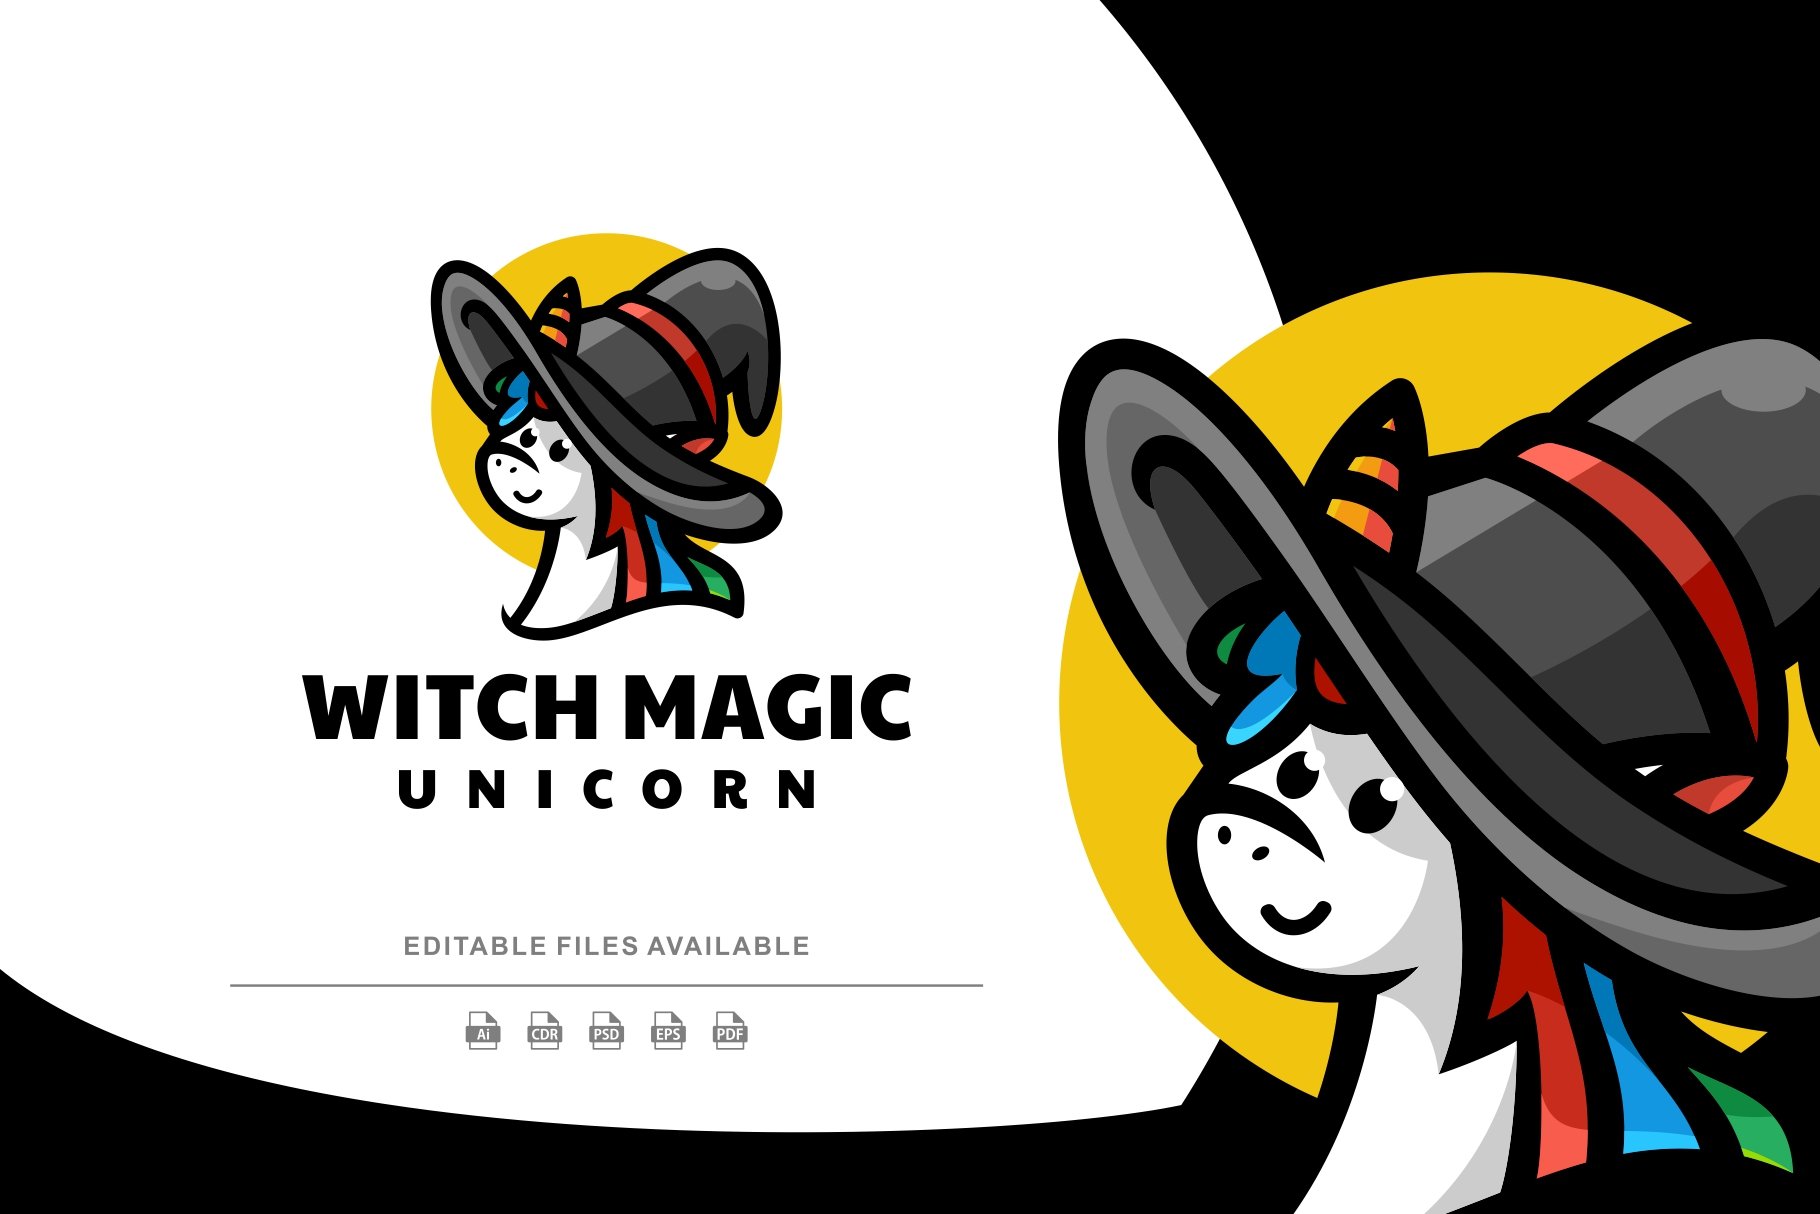 Unicorn Simple Mascot Logo cover image.